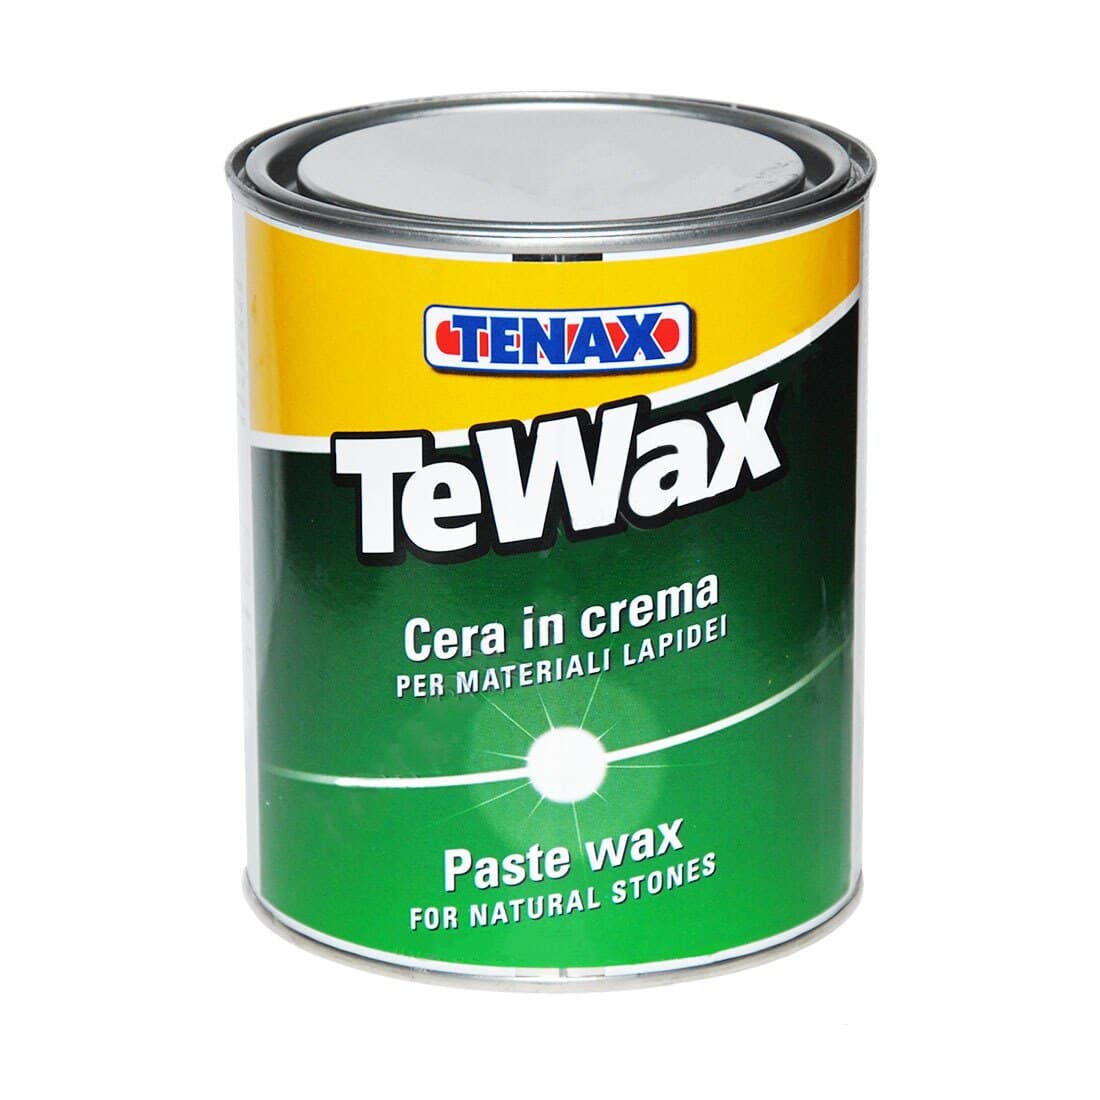 Tenax TeWax Paste Wax